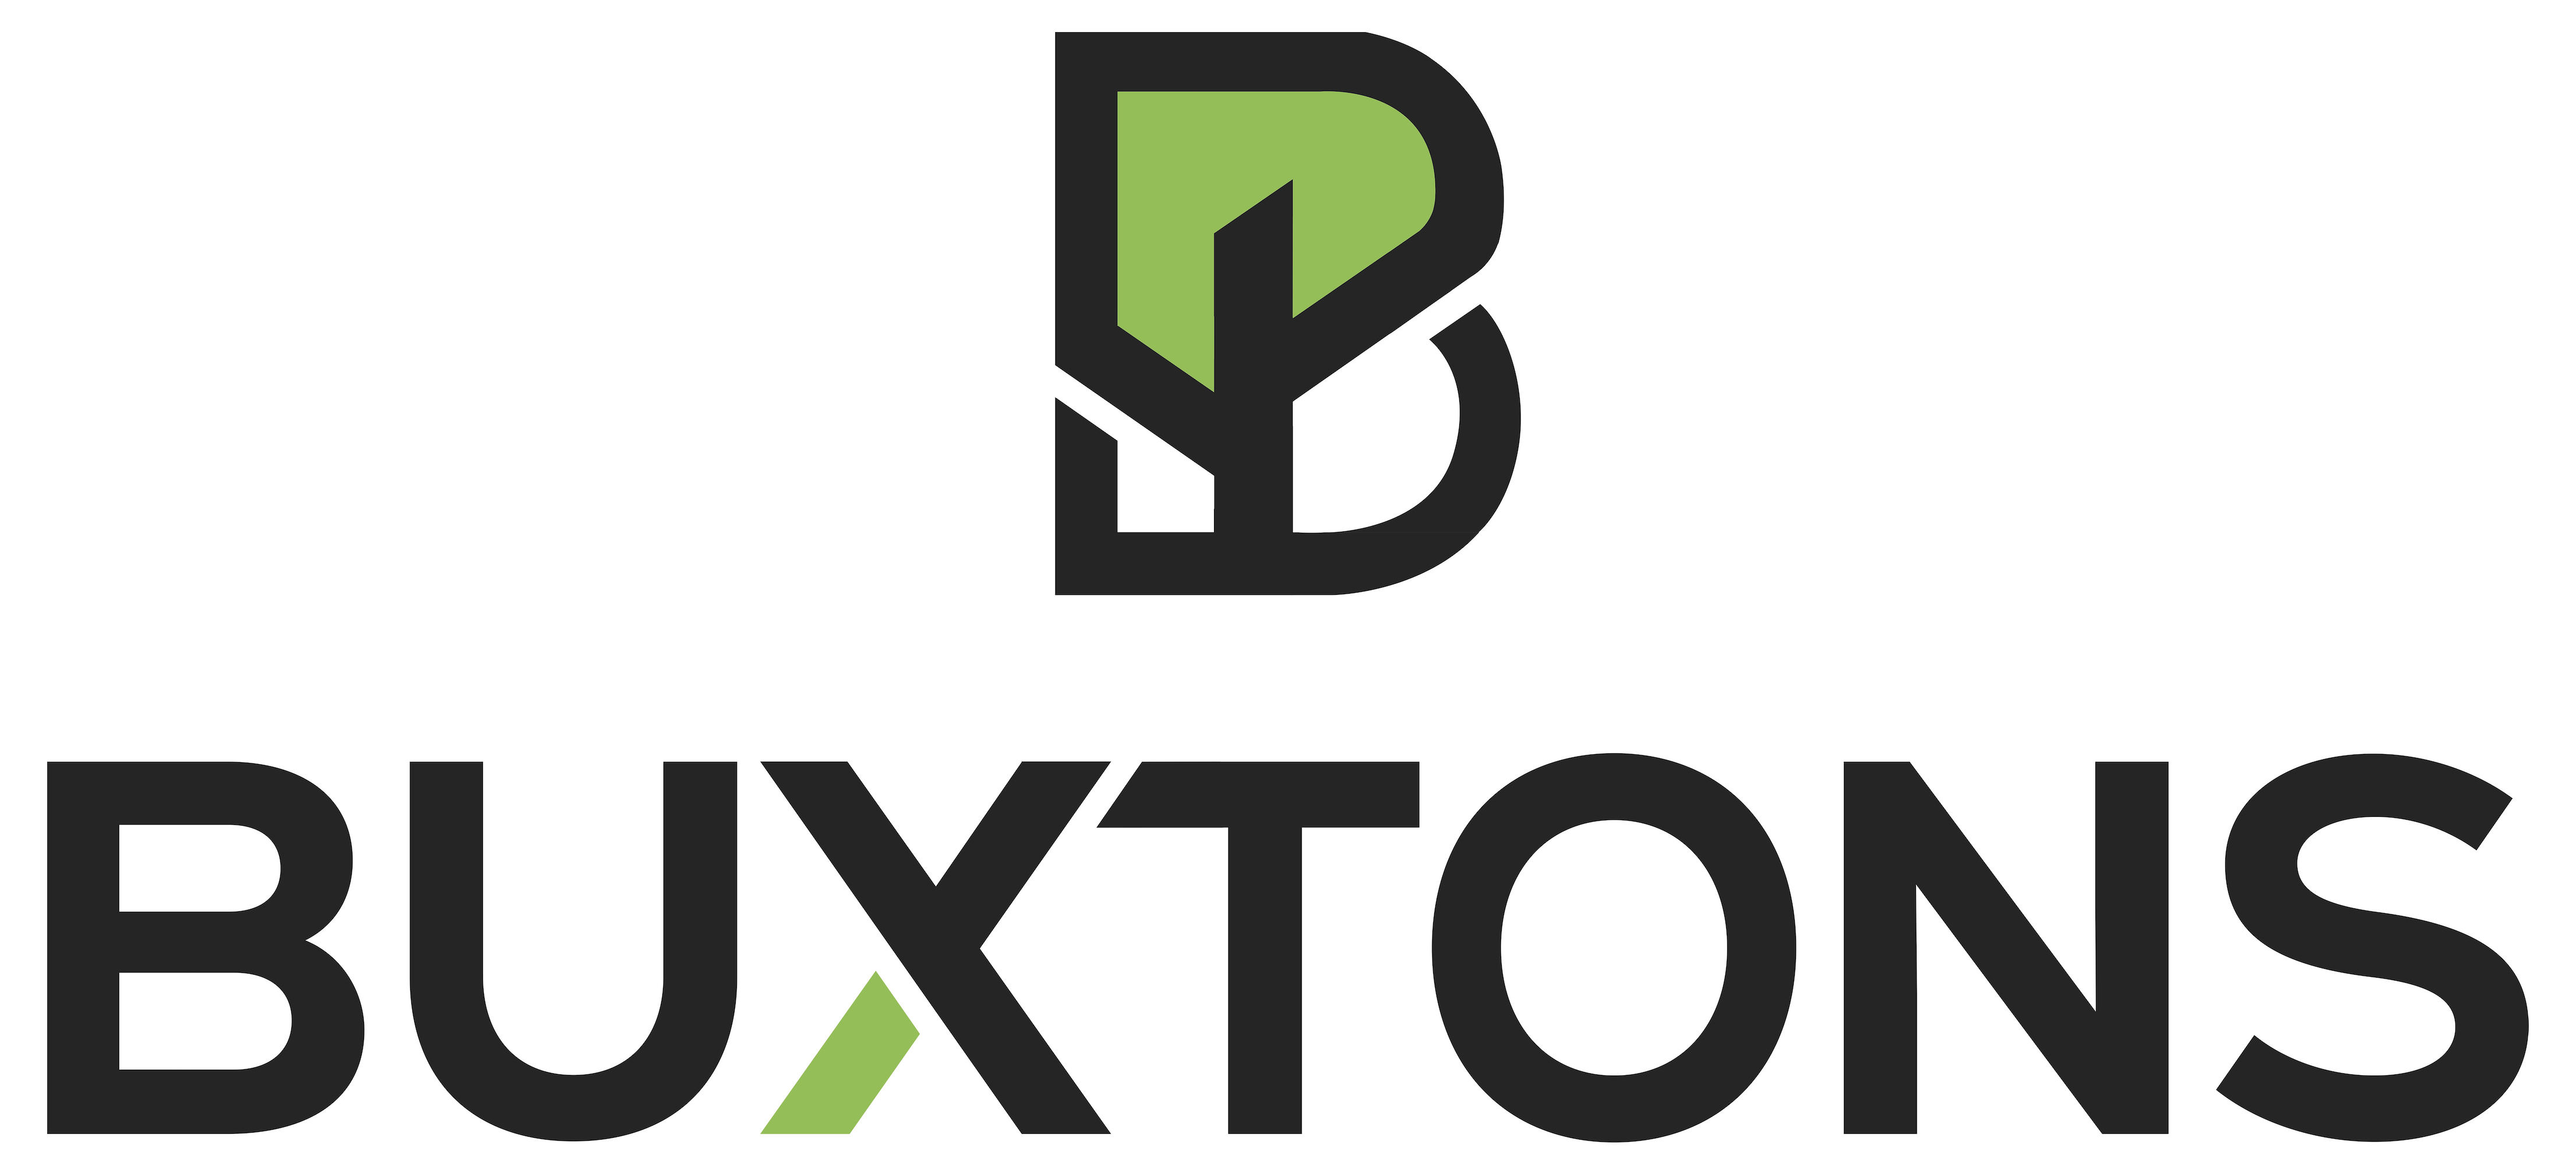 Buxton's Ltd